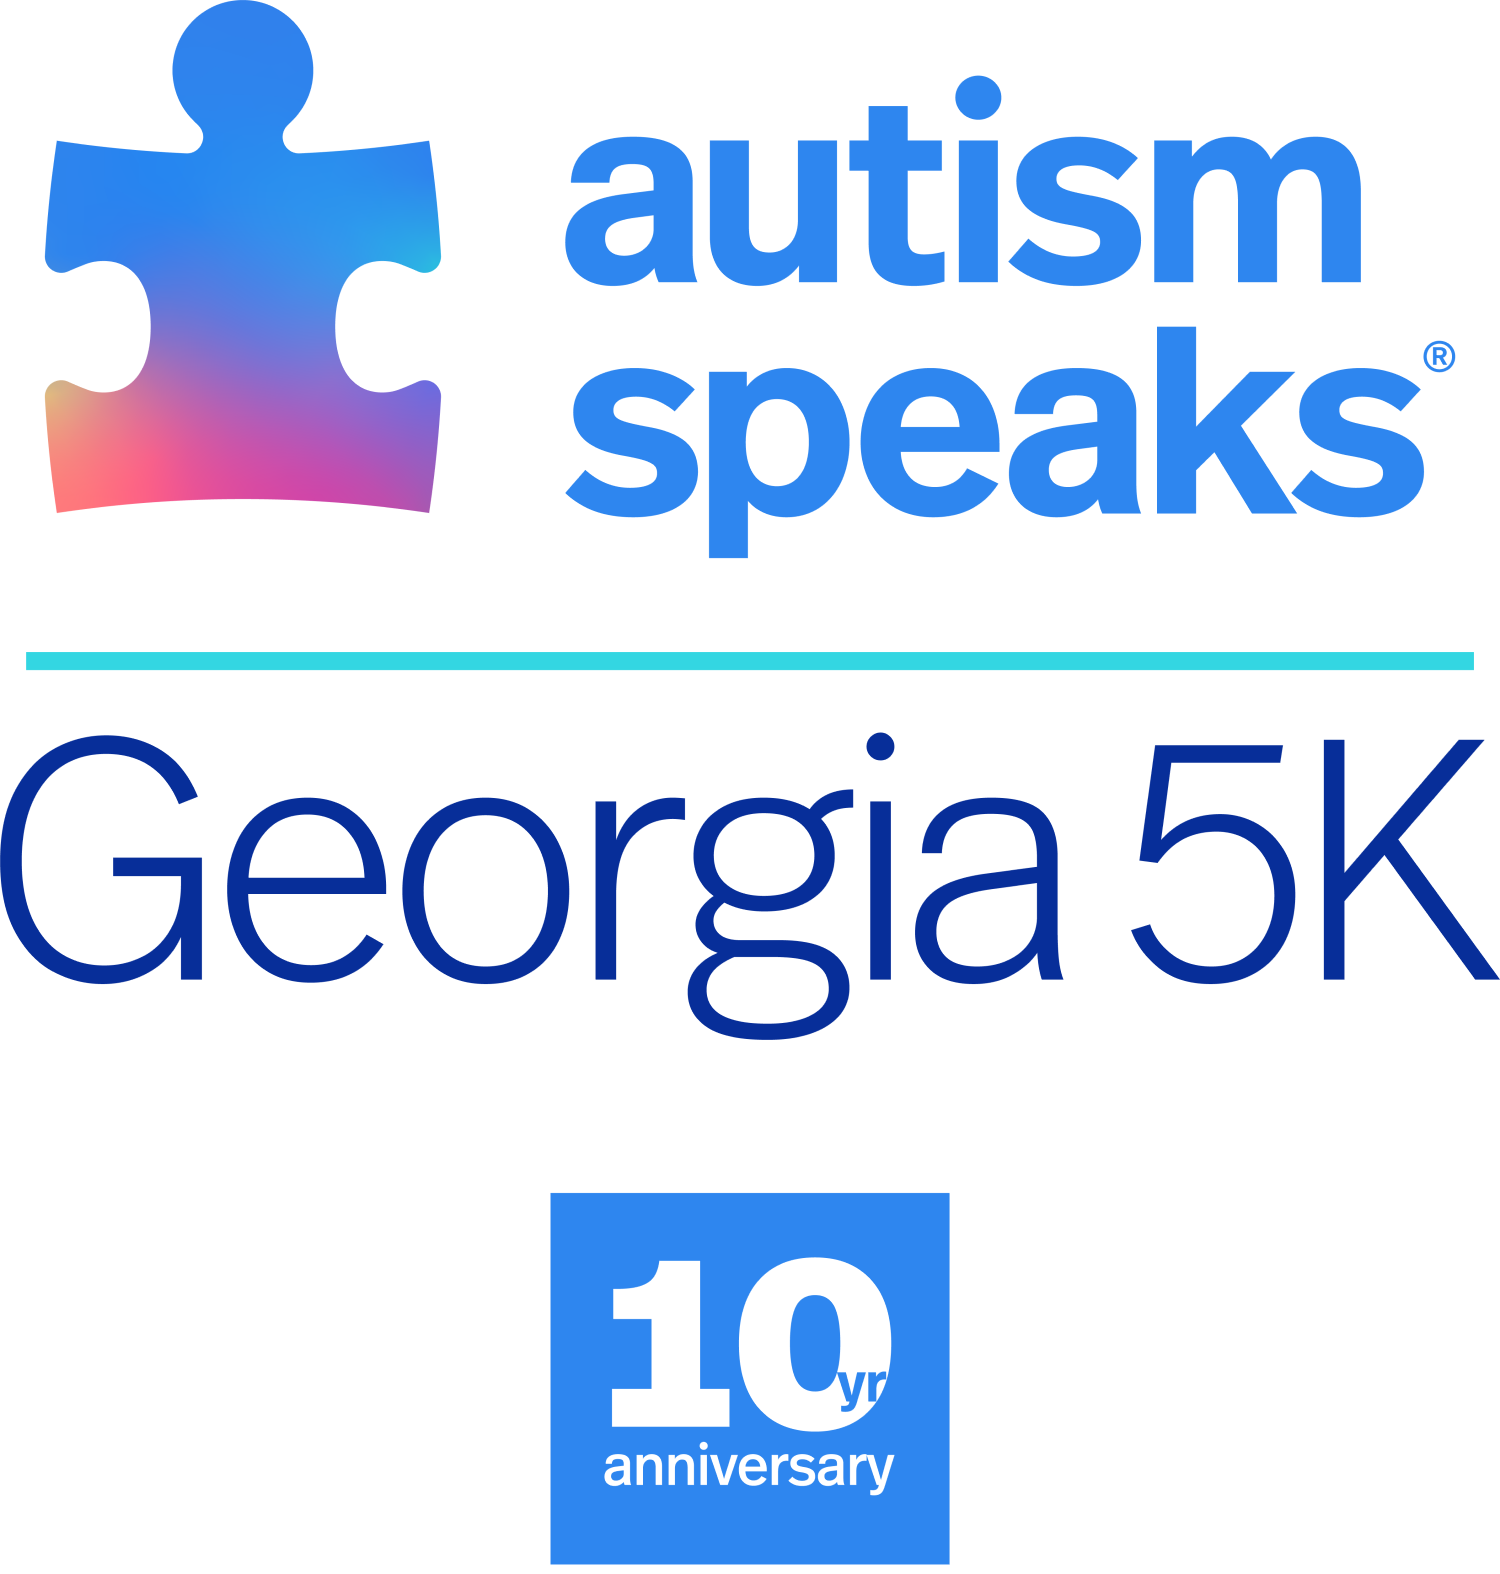 Georgia 5K - 10th Anniversary Logo